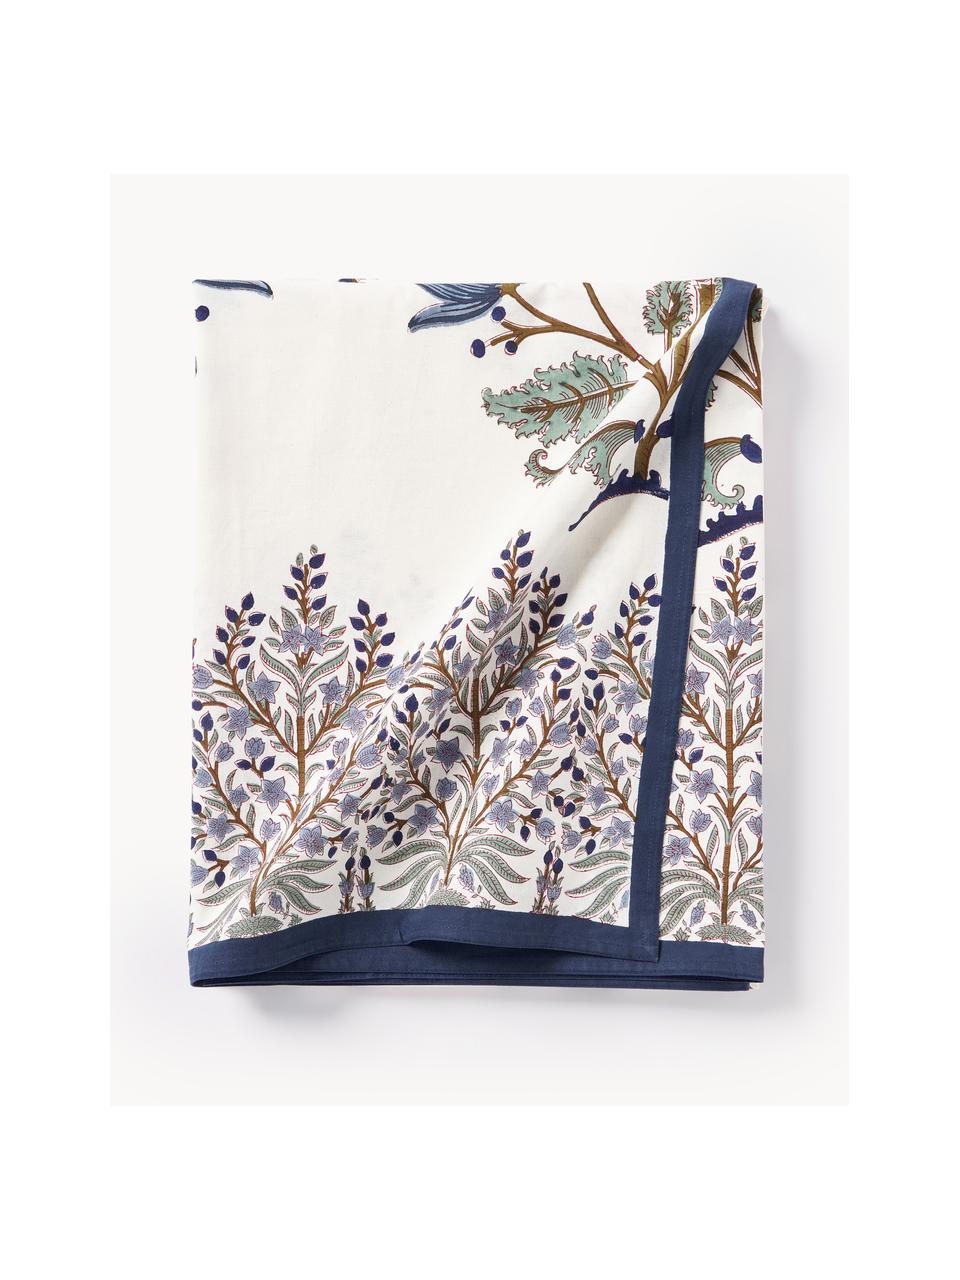 Mantel de algodón estampado floral Flora, 100% algodón, Azul oscuro, marrón, verde oliva, Off White, De 8 a 10 comensales (An 170 x L 300 cm)